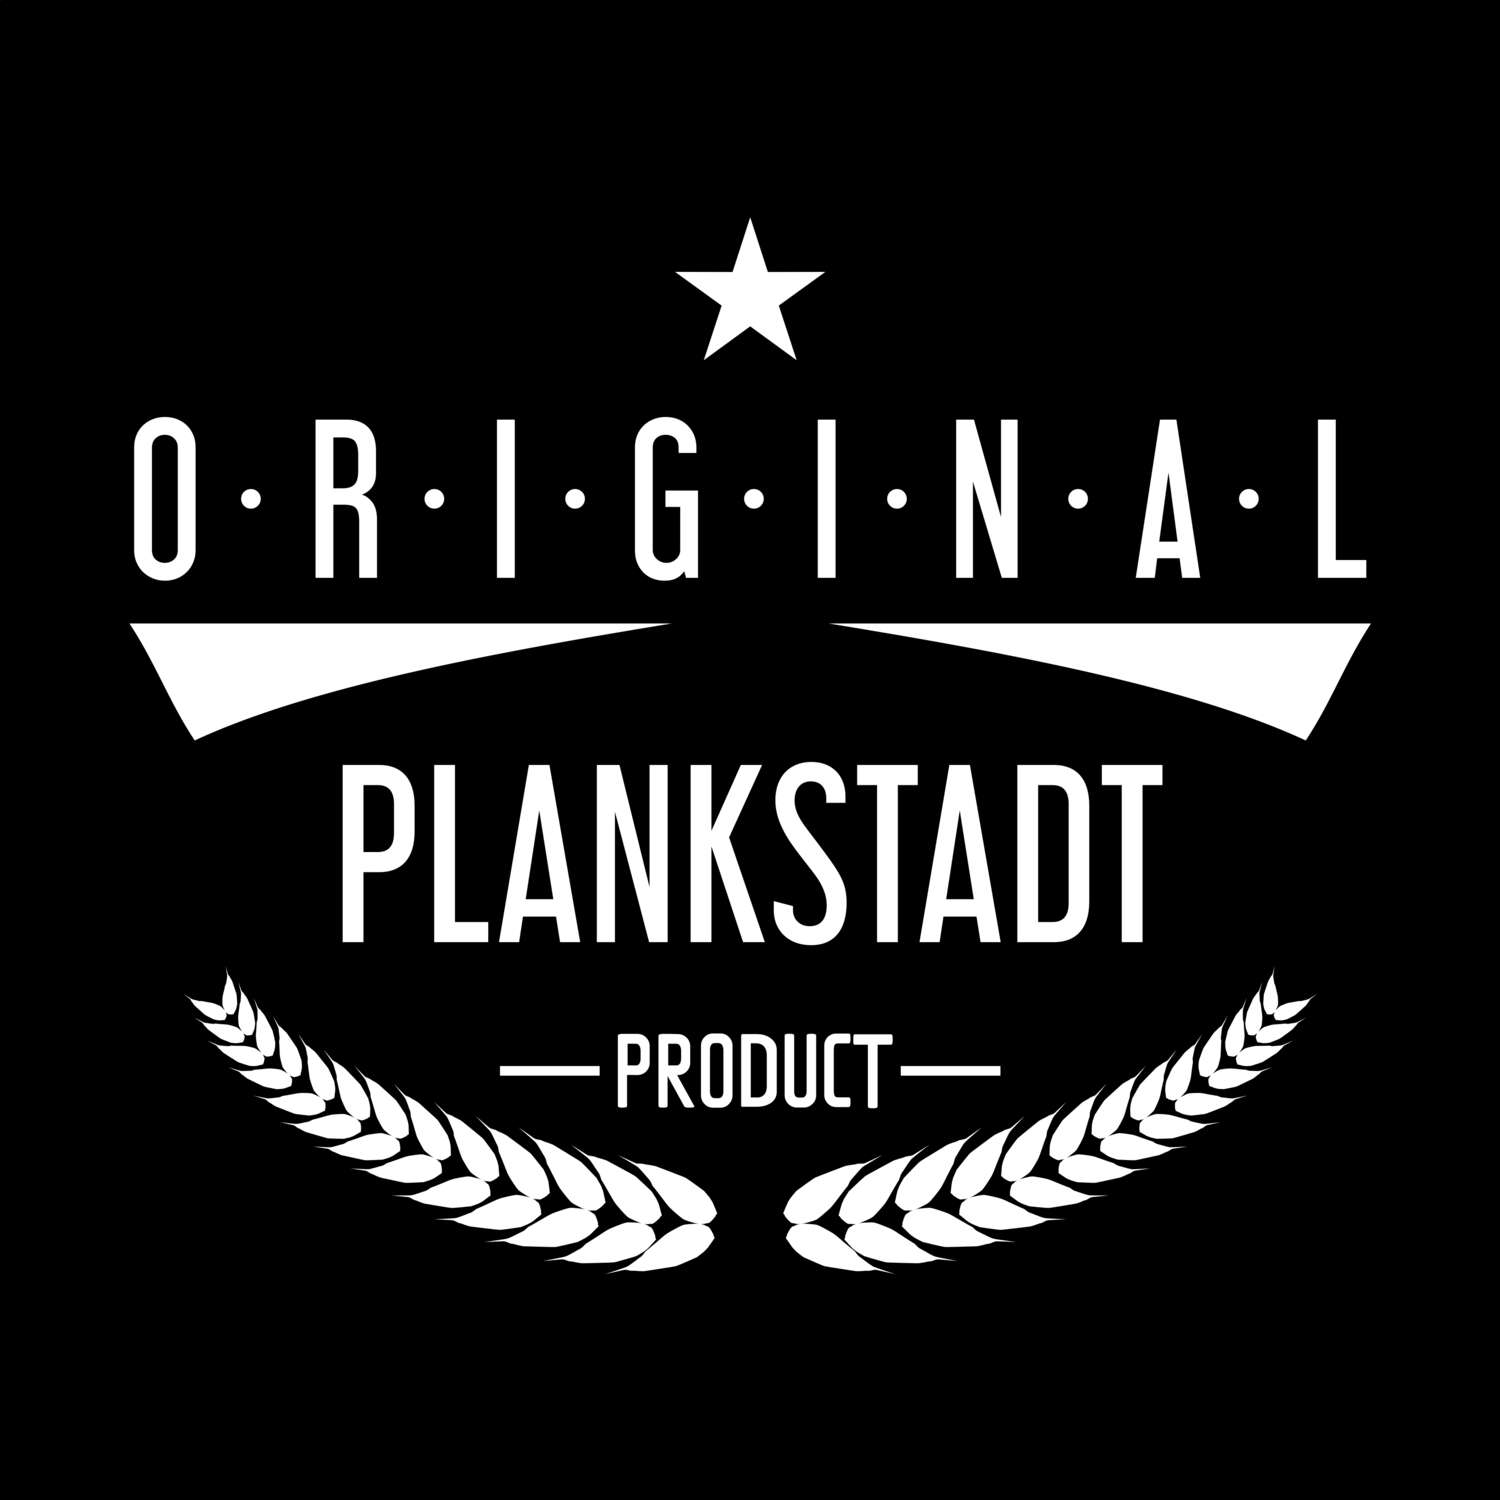 Plankstadt T-Shirt »Original Product«